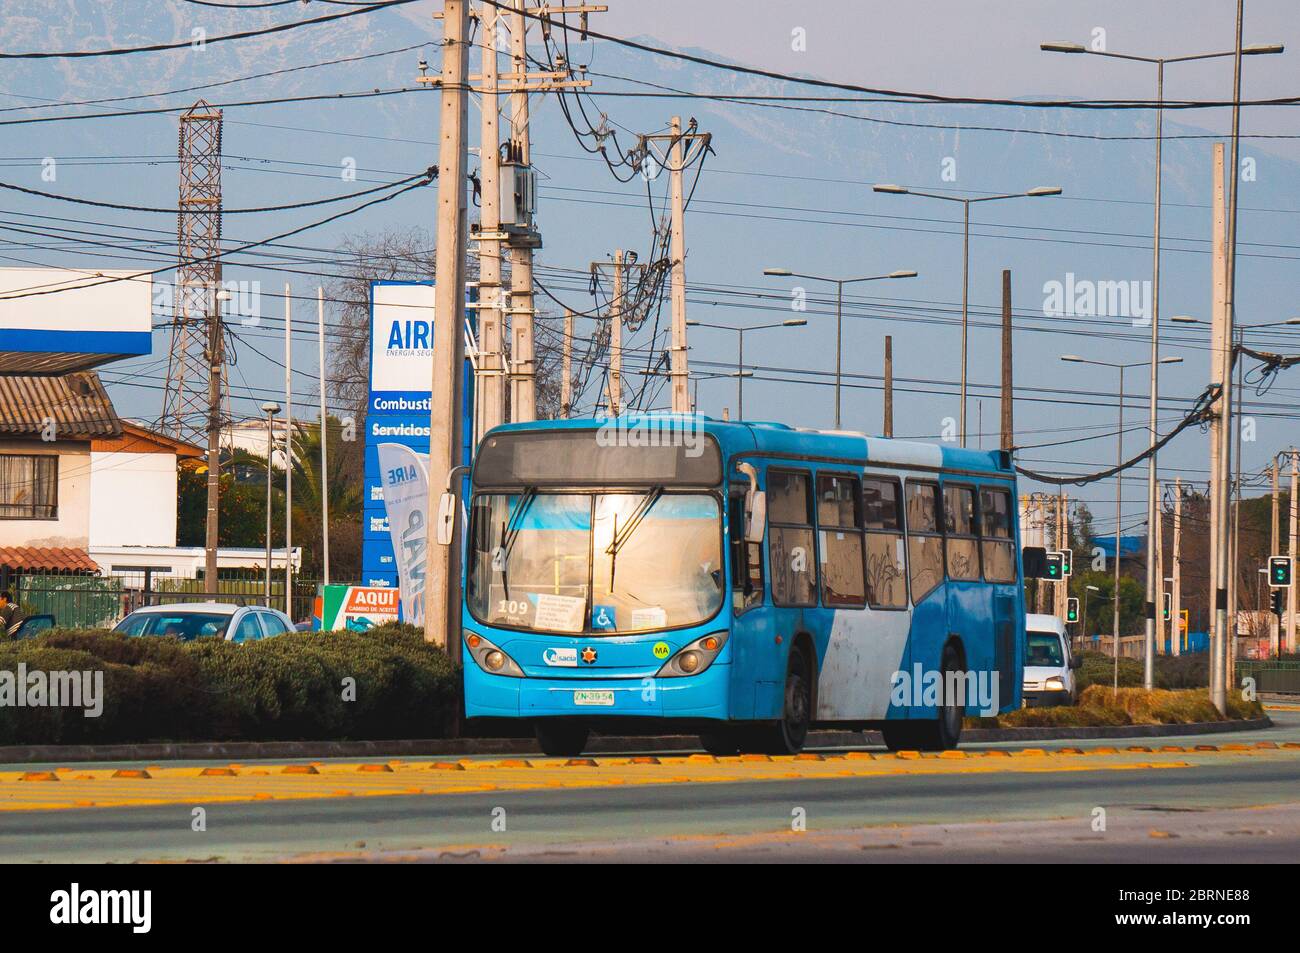 Santiago, Chile - July 2016: A public transport bus in Santiago Stock Photo